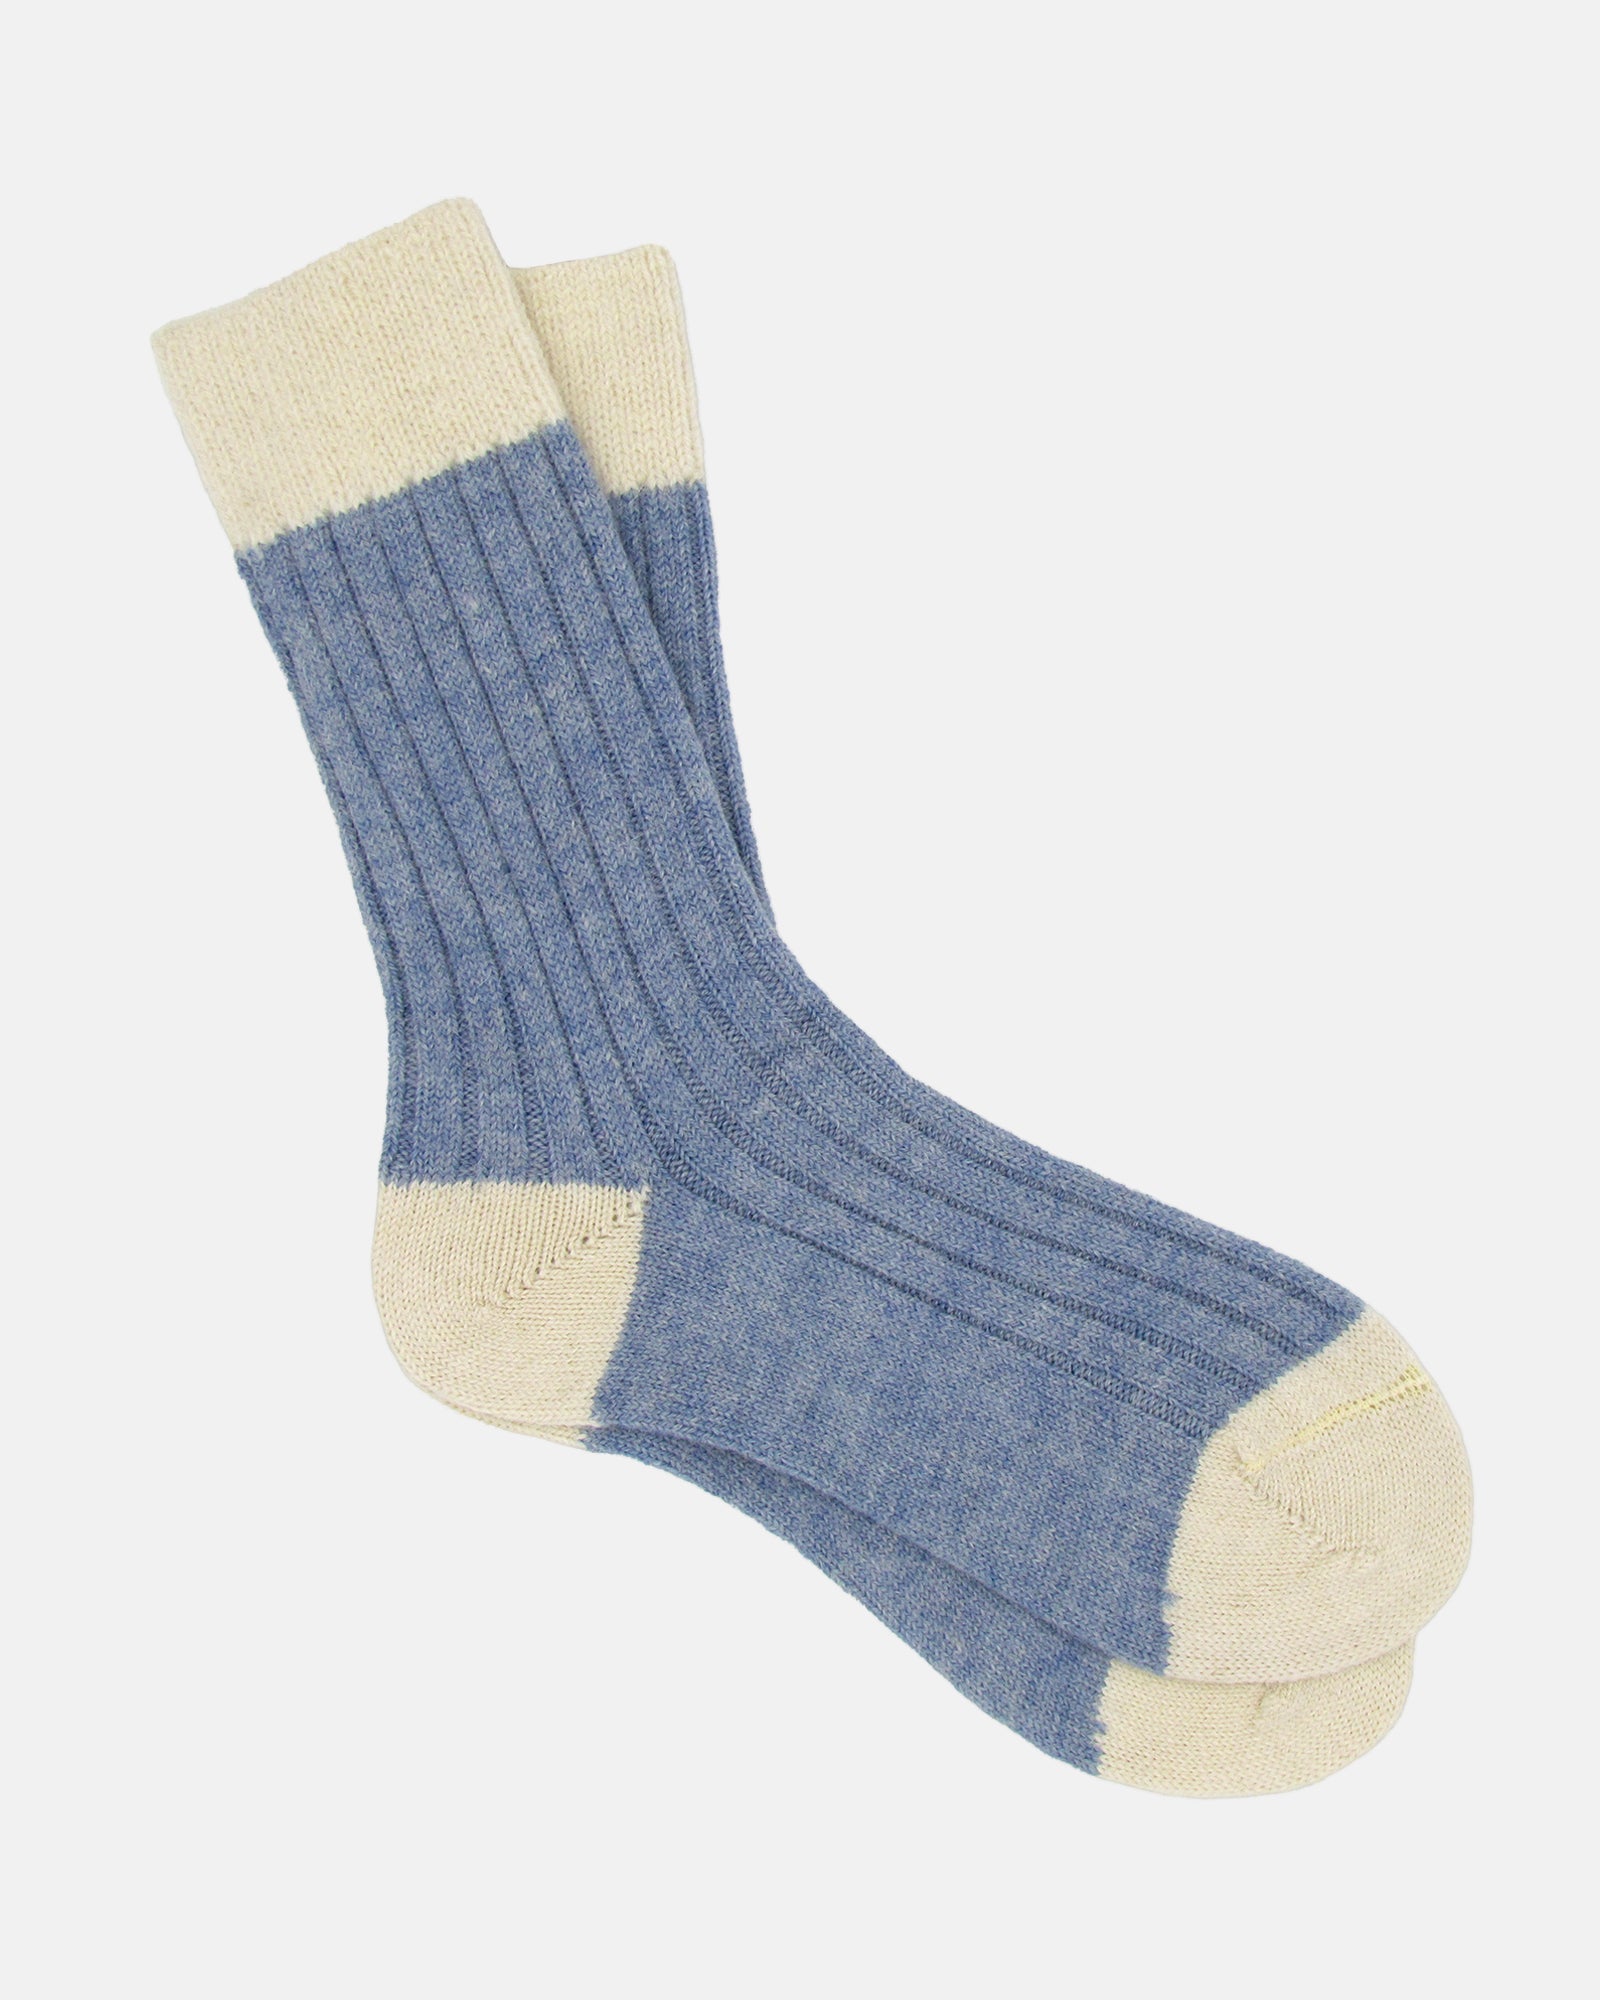 Alpaca Bed Socks - Blueberry - BRIT LOCKER